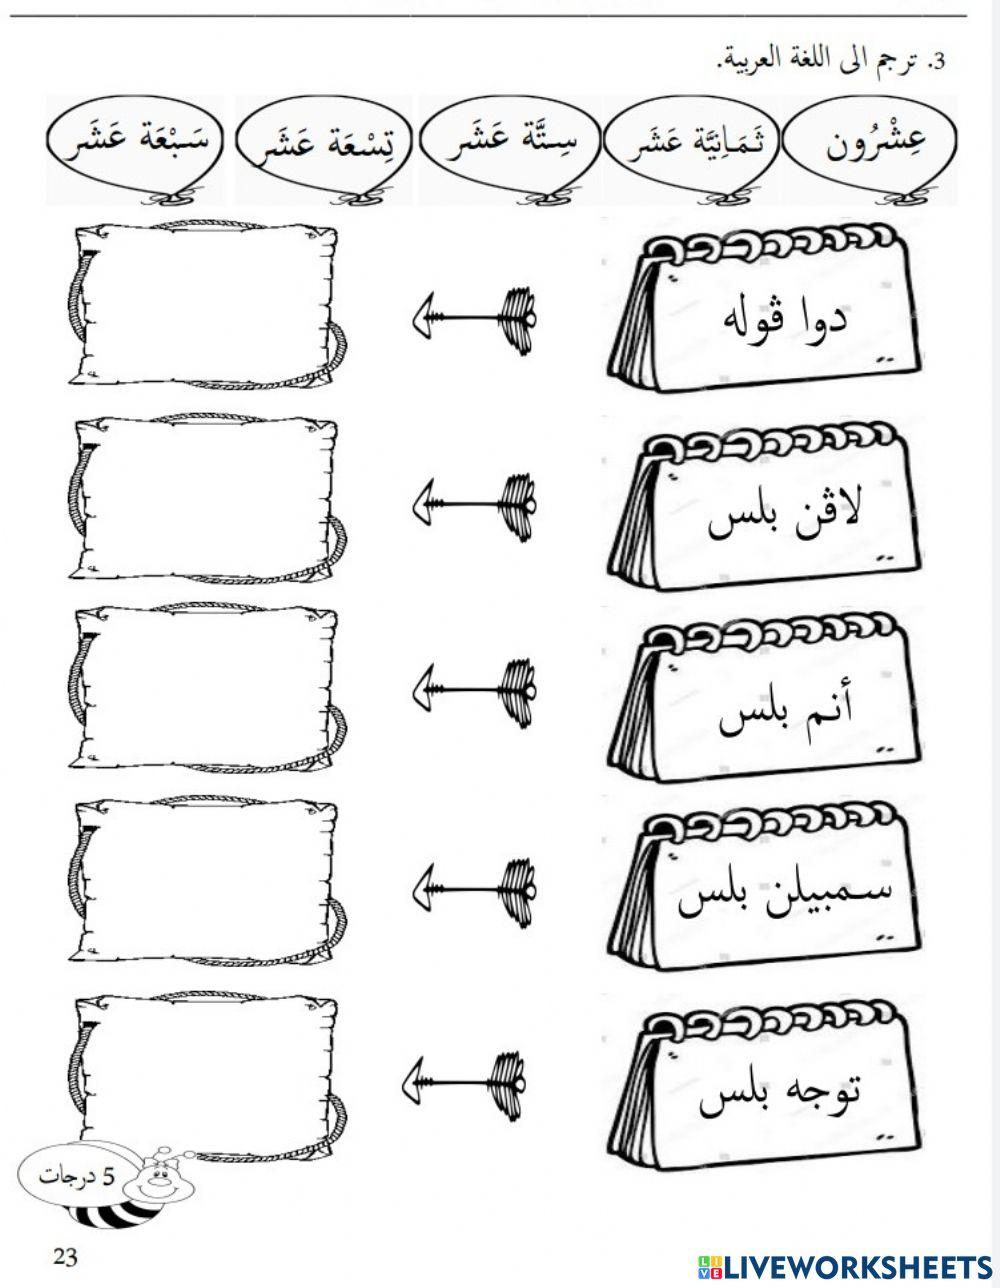 Latihan bahasa arab dh 3